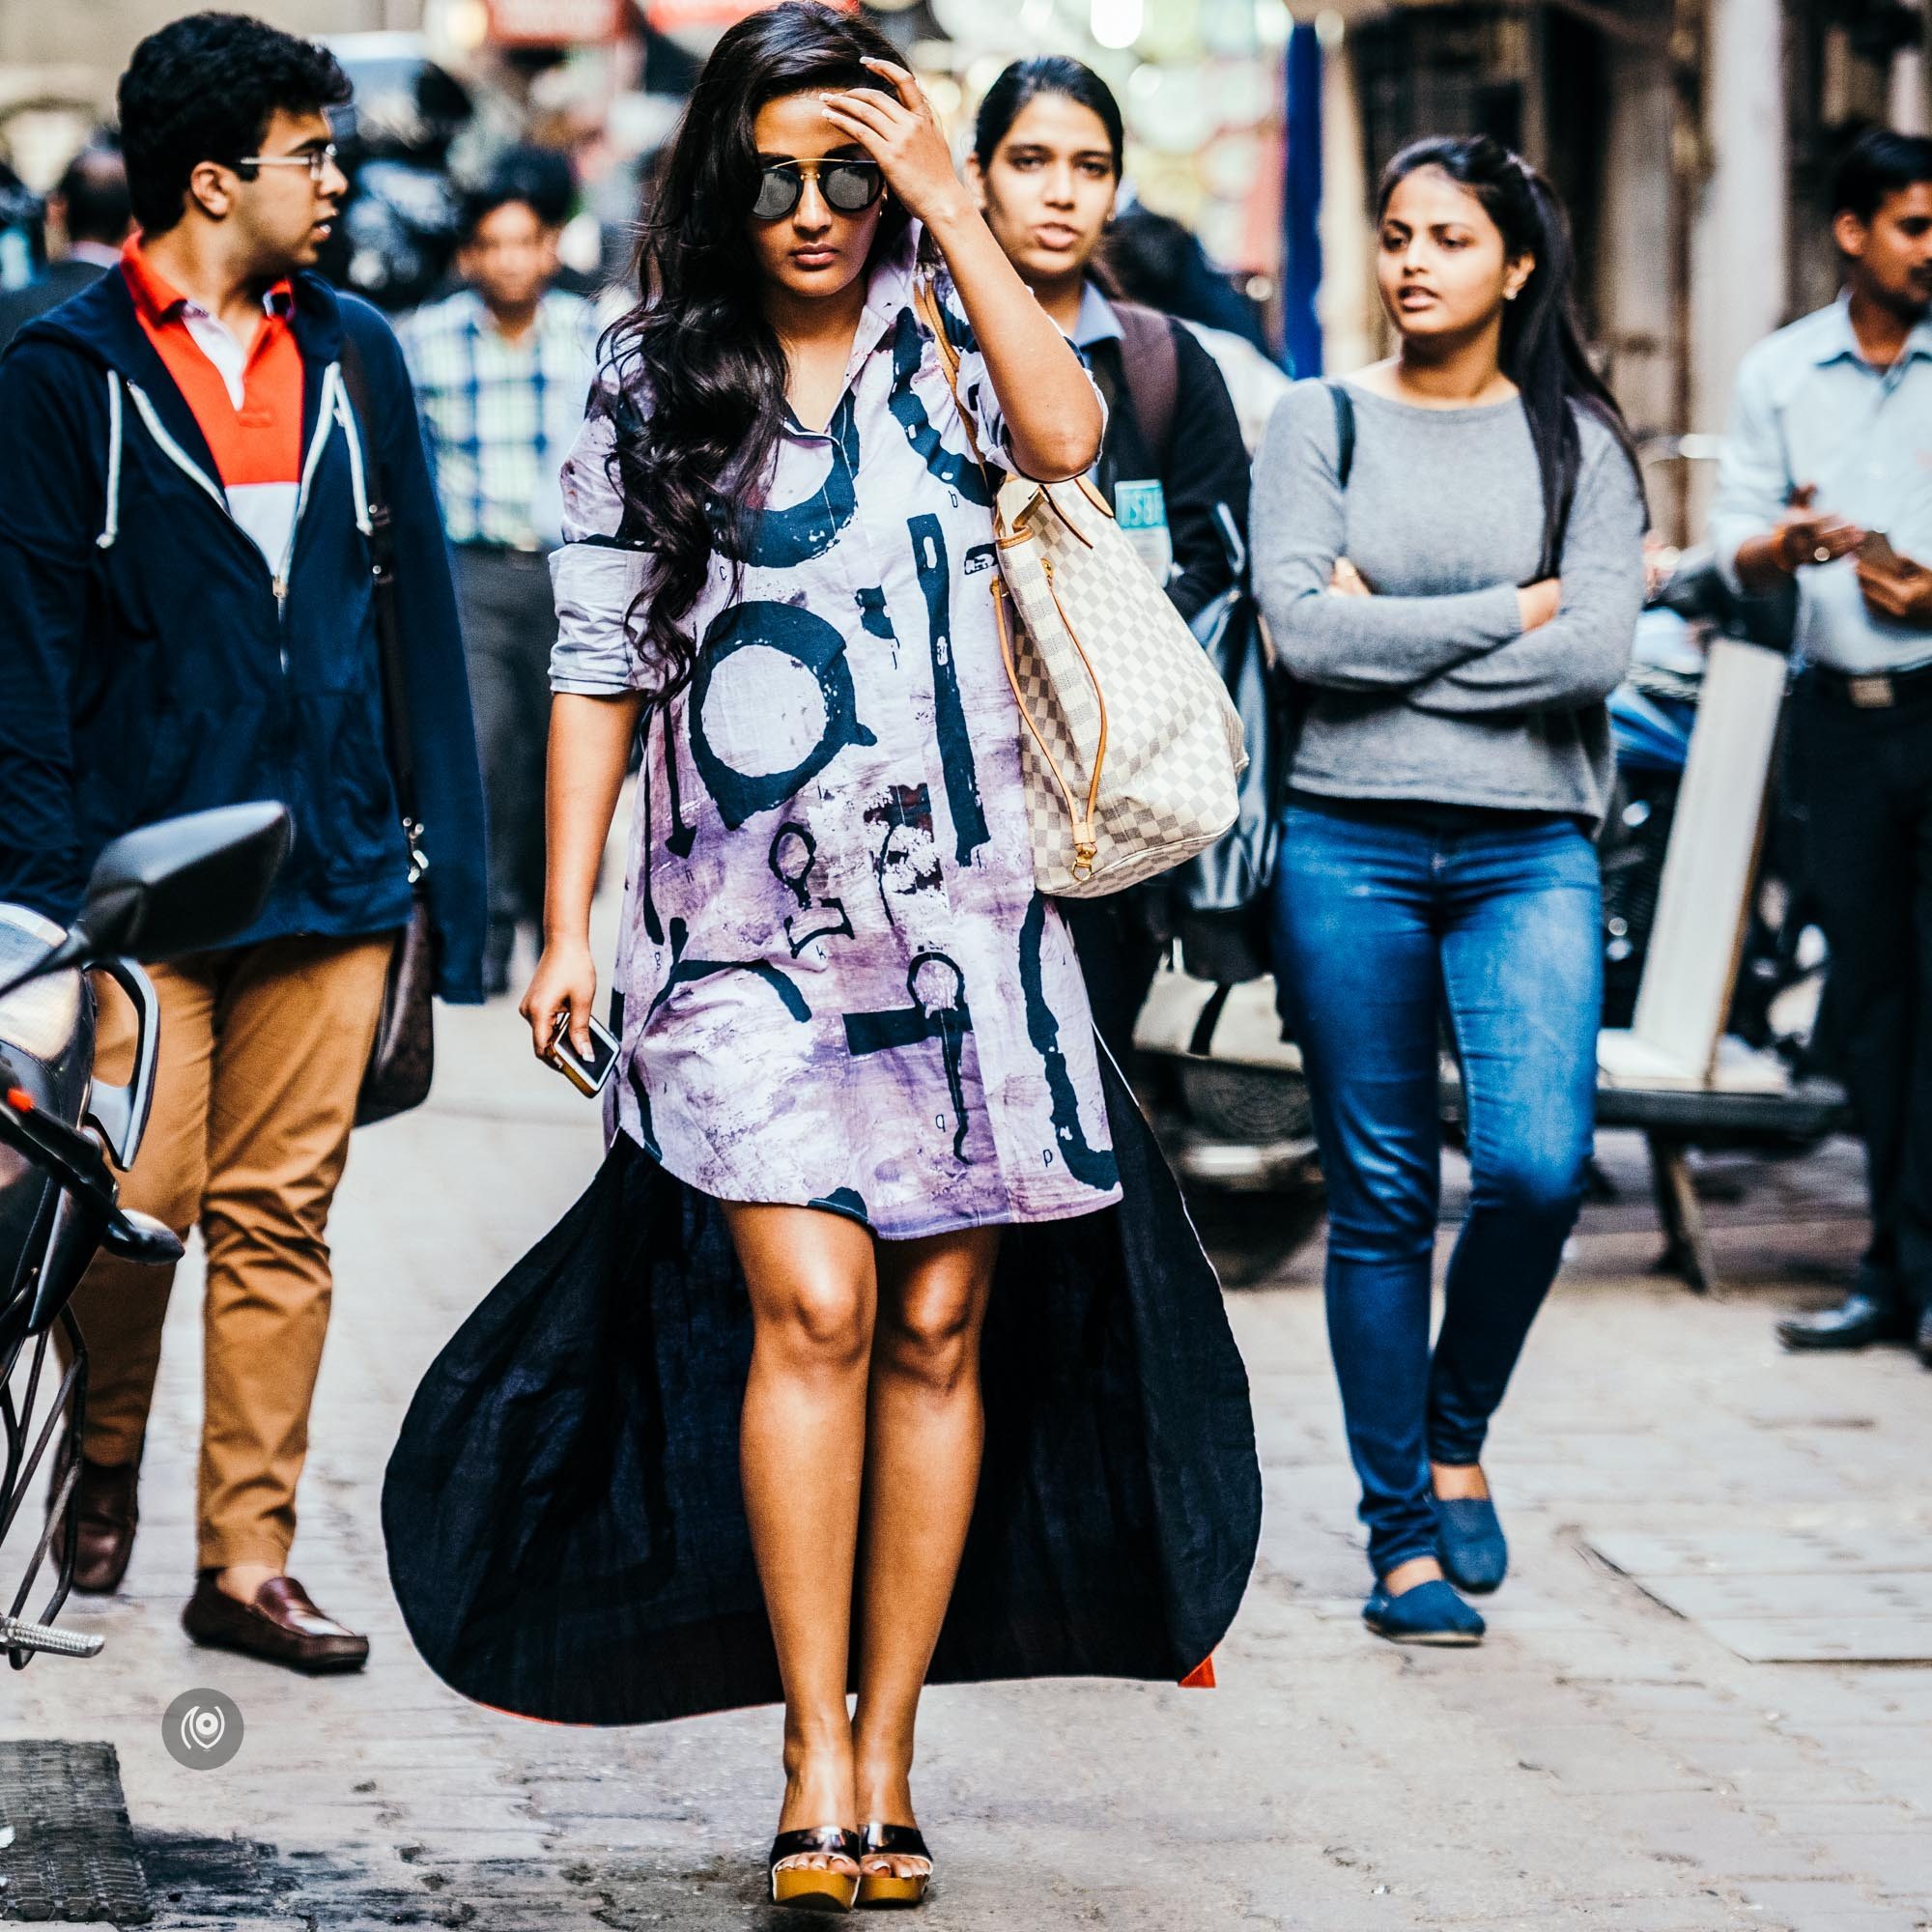 #EyesForStreetStyle, #NewDelhi, Naina.co, Luxury Photographer, Lifestyle Photographer, Luxury Blogger, Lifestyle Blogger, Experience Collector, Indian Street Style, Street Style Photography, India, Street Style